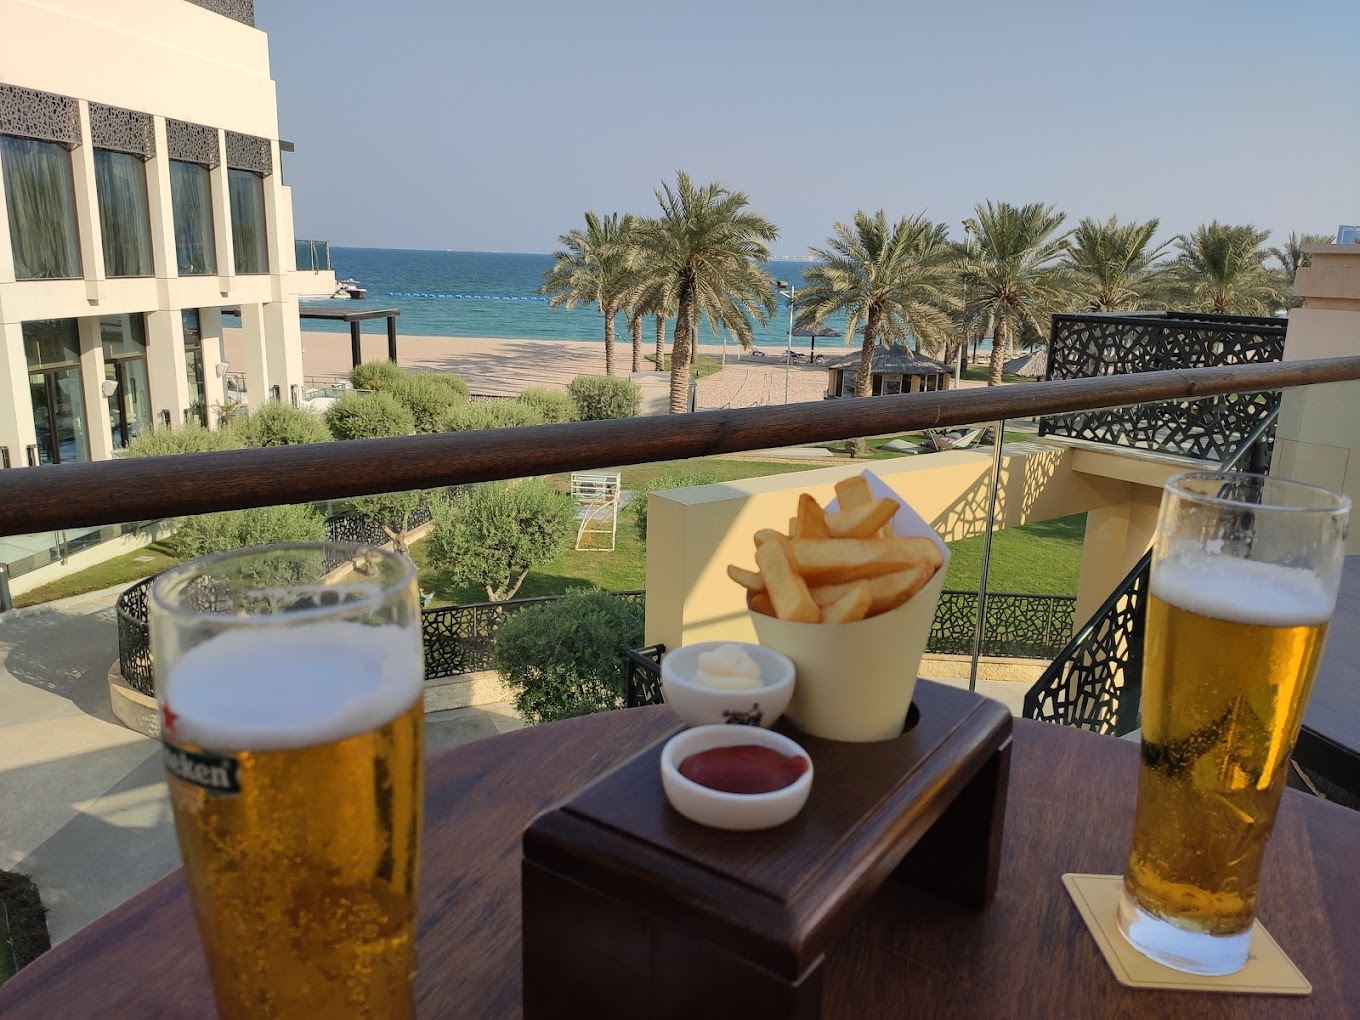 Beer in Qatar